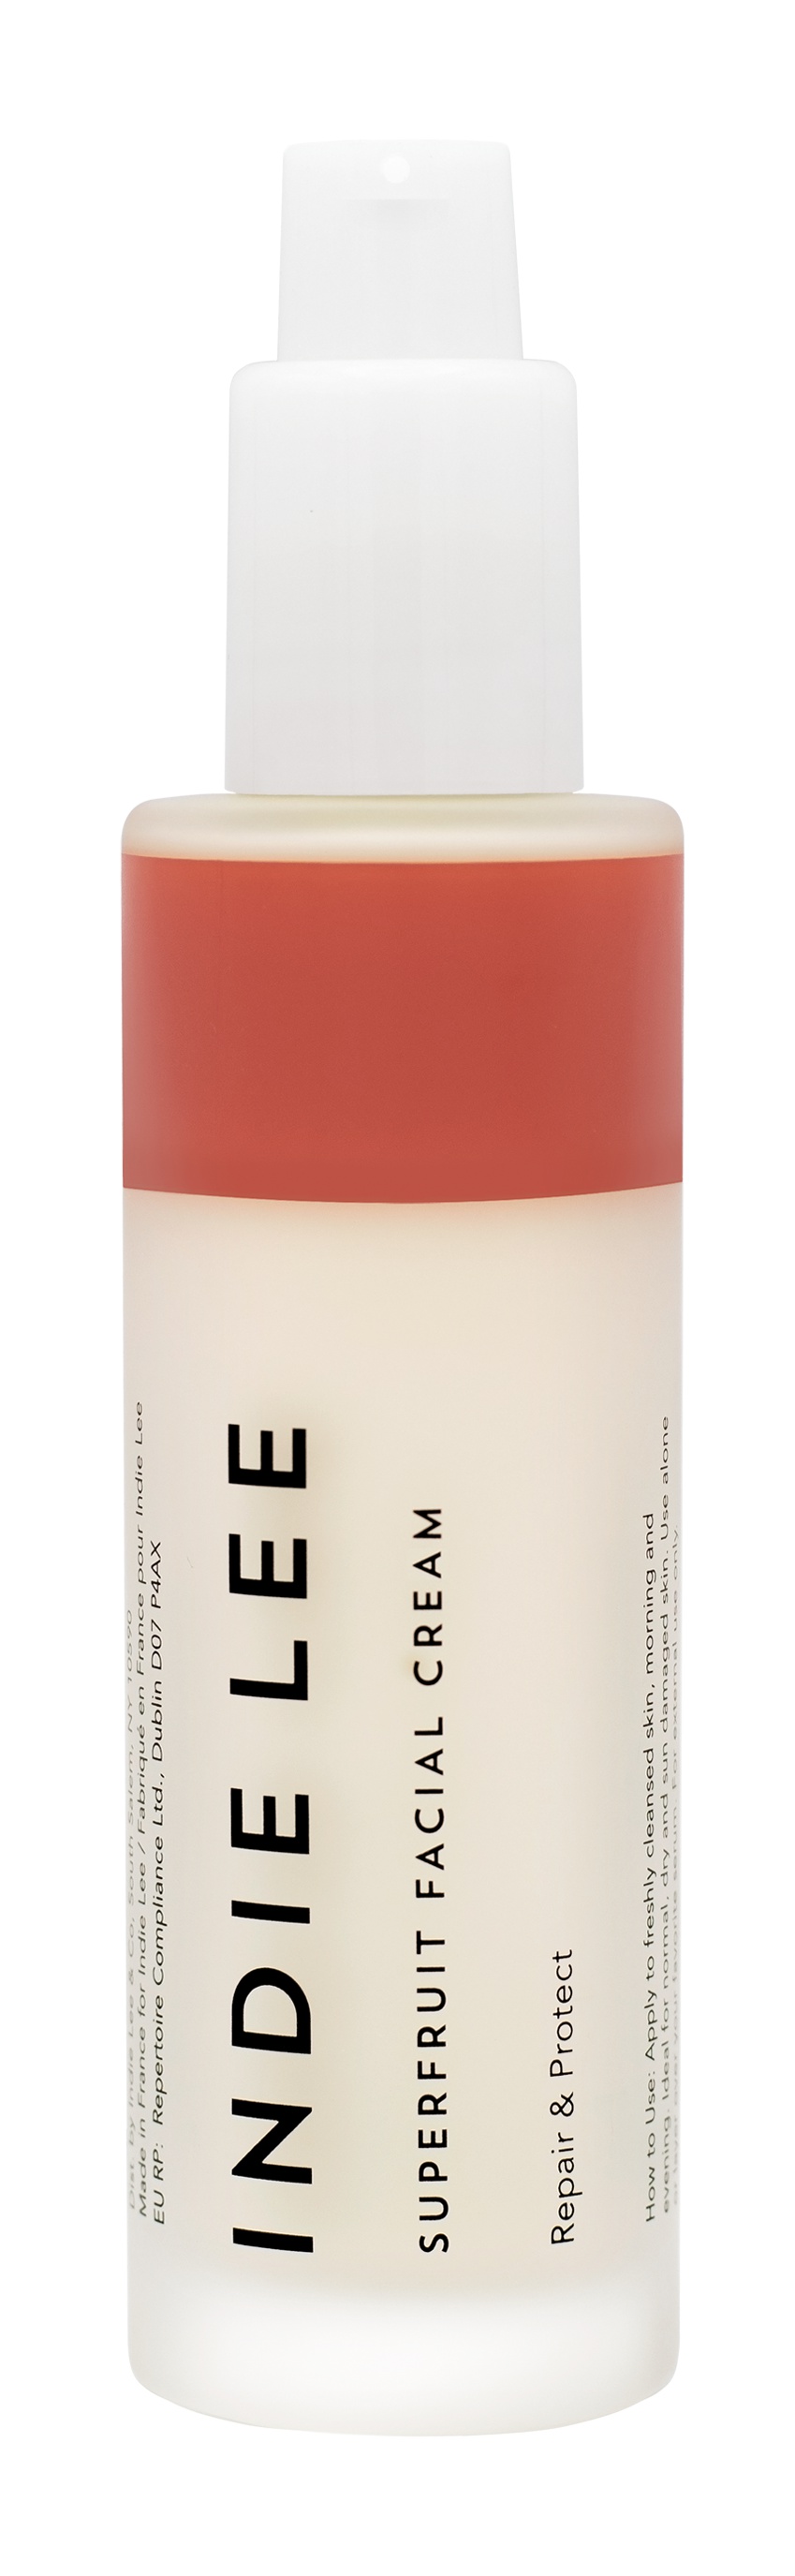 Indie Lee Superfruit Facial Cream